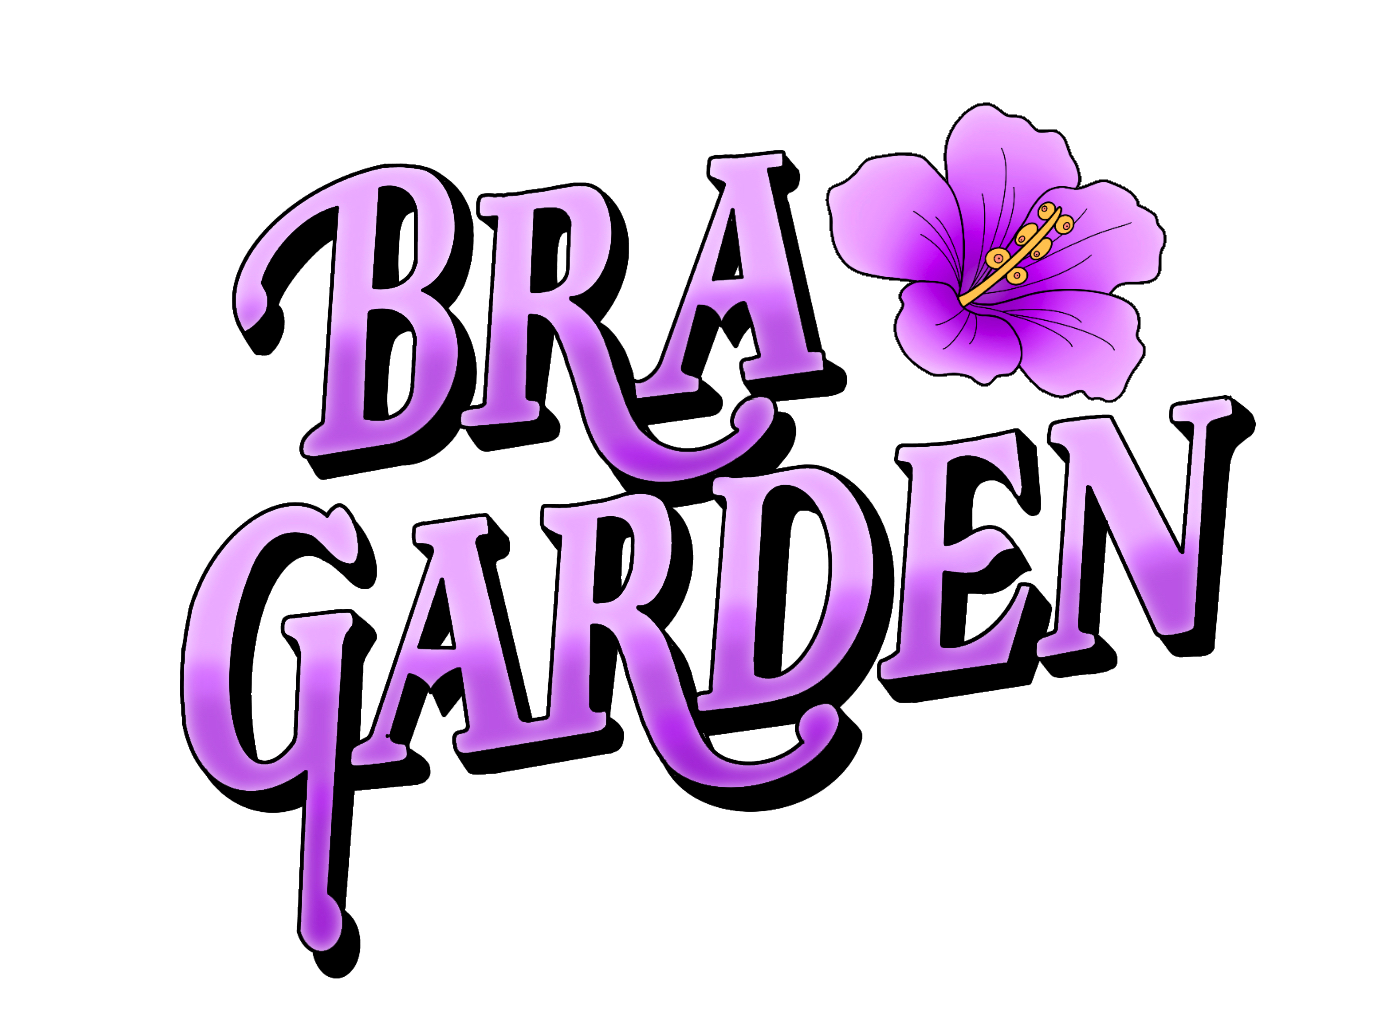 The Bra Garden